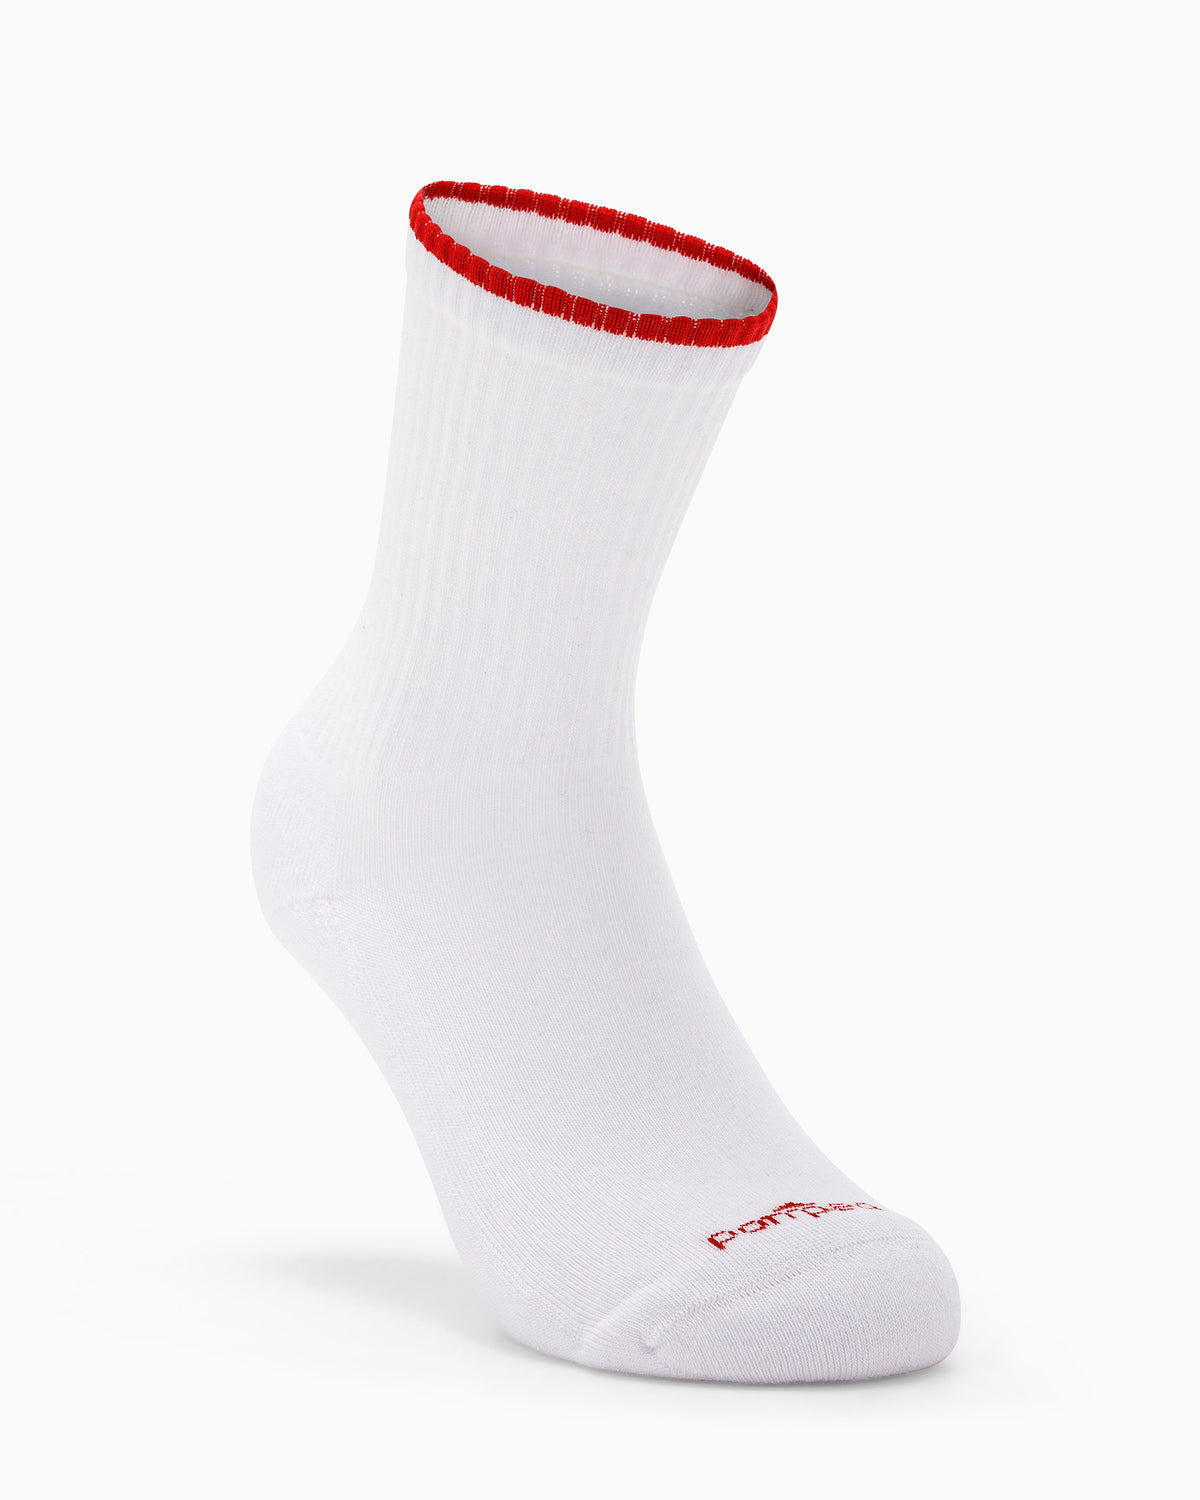 Two-tone unisex tennis socks